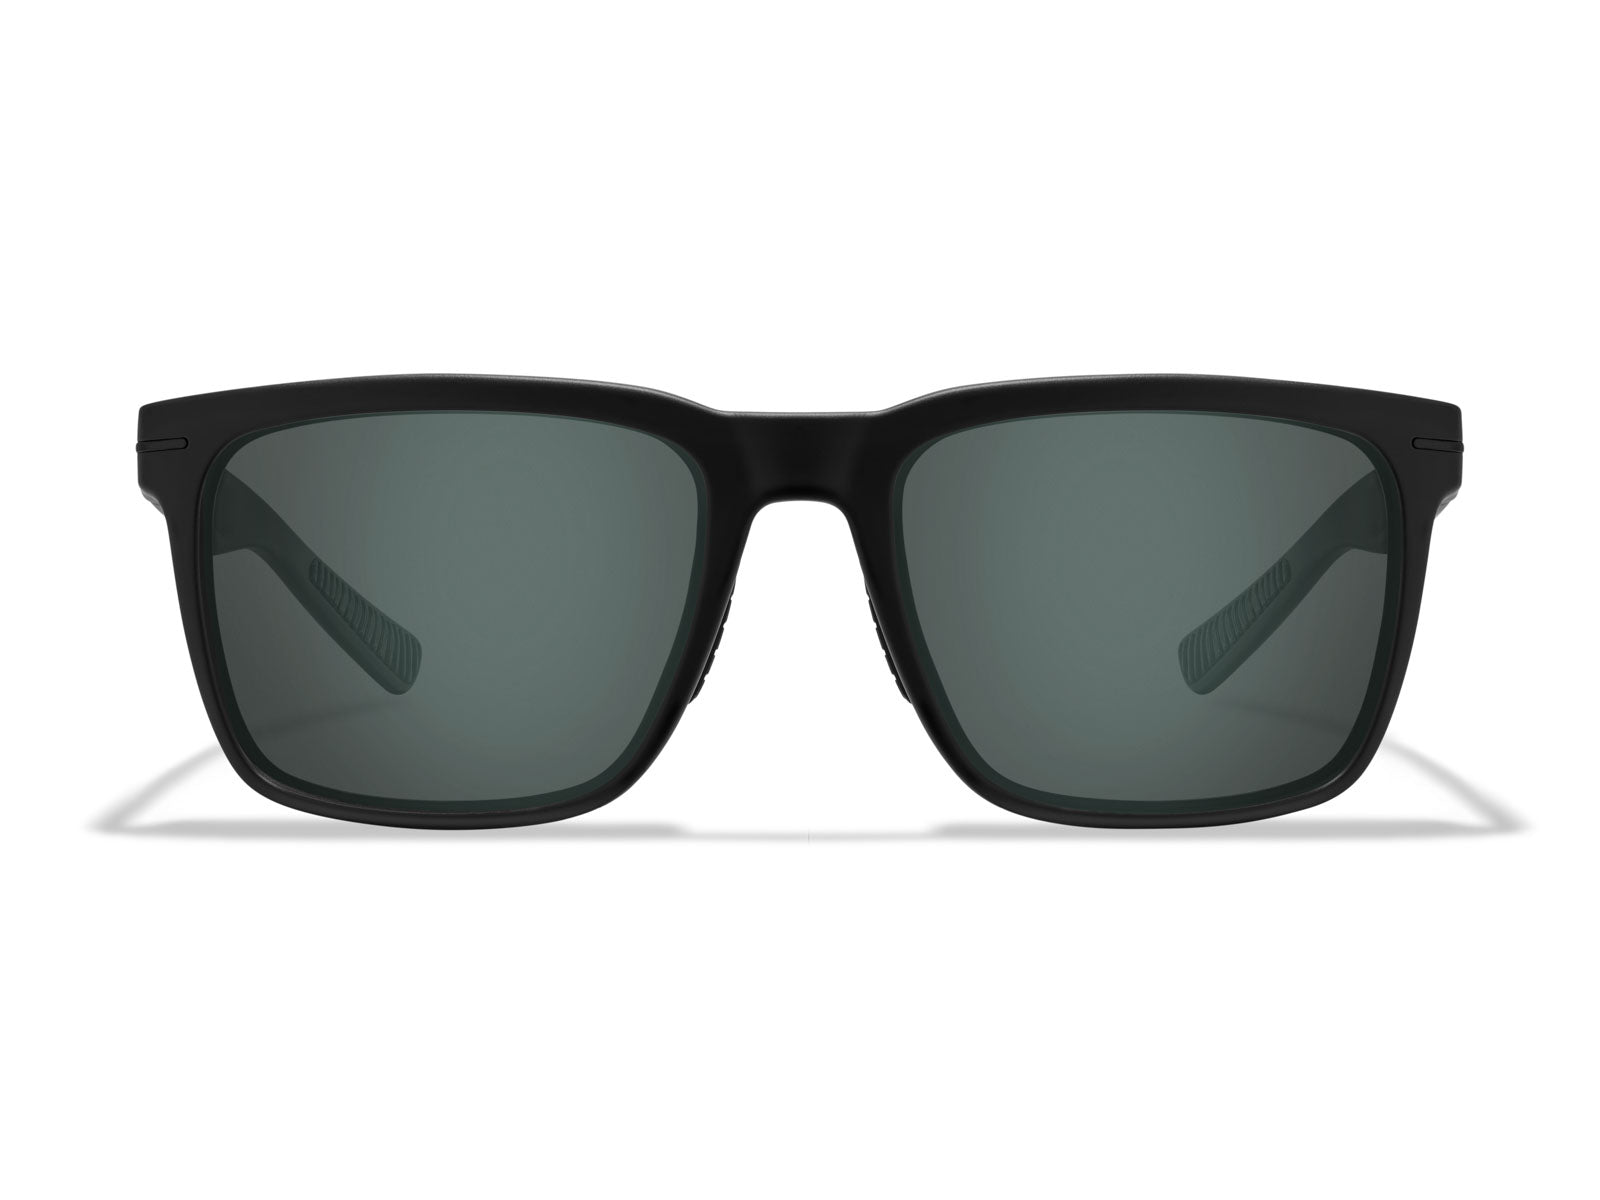 Roka Barton 2.0 Sunglasses with Matte Black/Matte Campfire Tortoise Frames - Dark Carbon (Polarized) Lens | Regular (56)